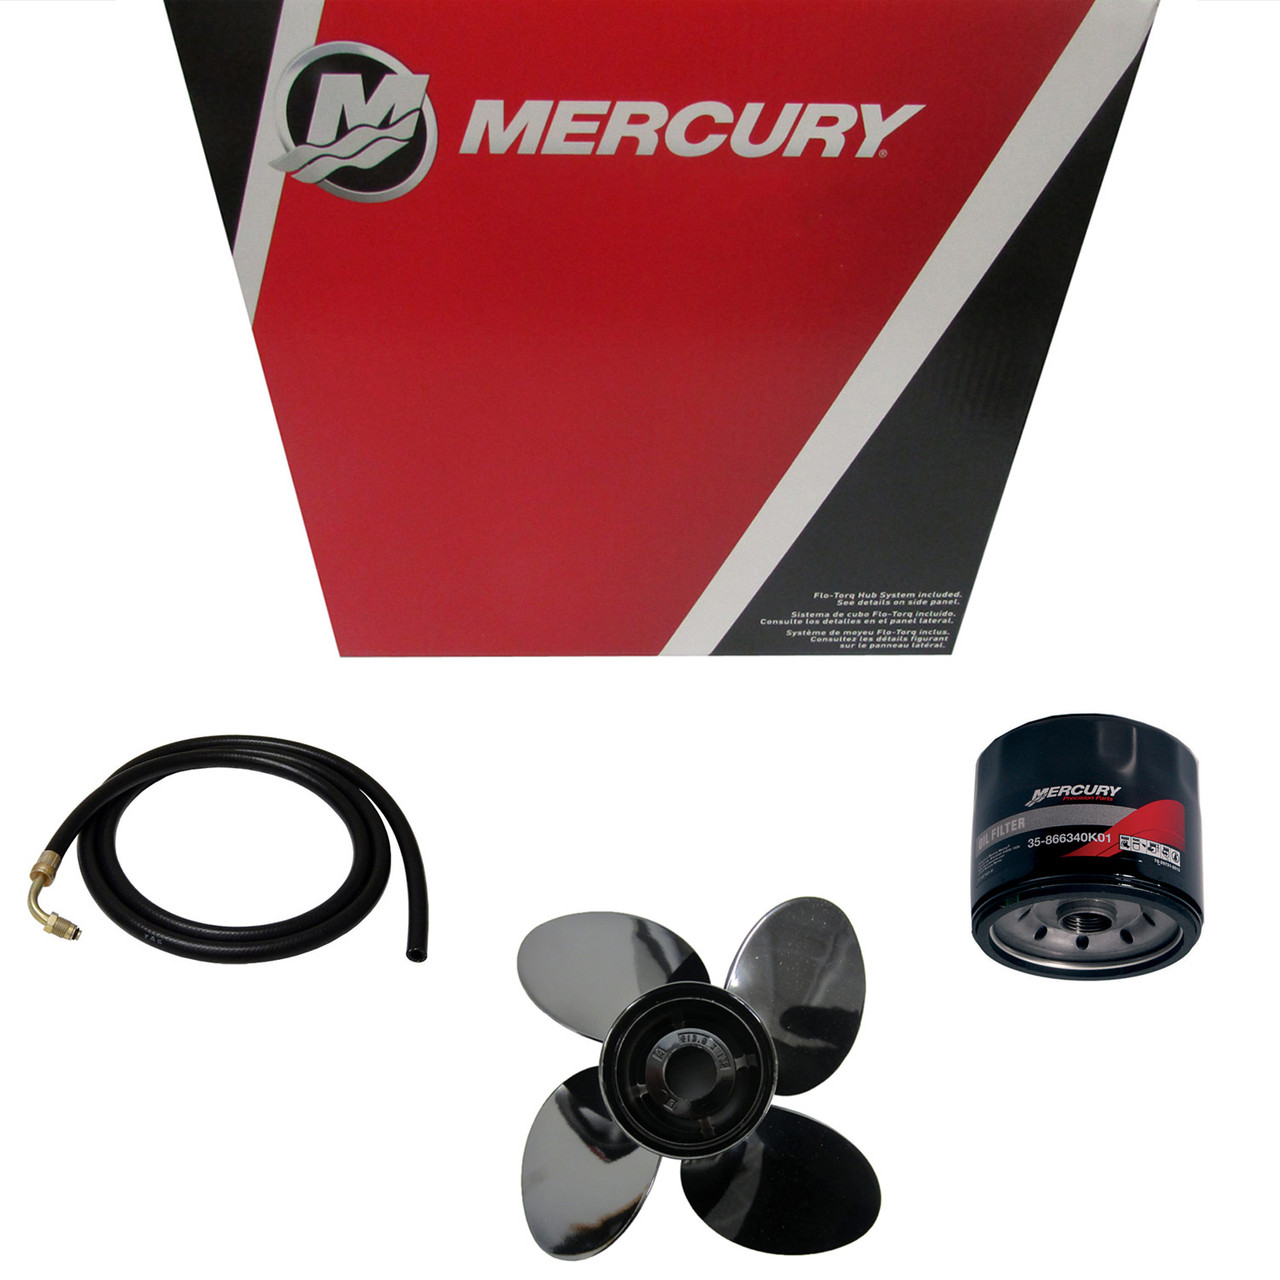 Mercury Marine / Mercruiser New OEM Prem+Syn Oil3, 92-858031Q01